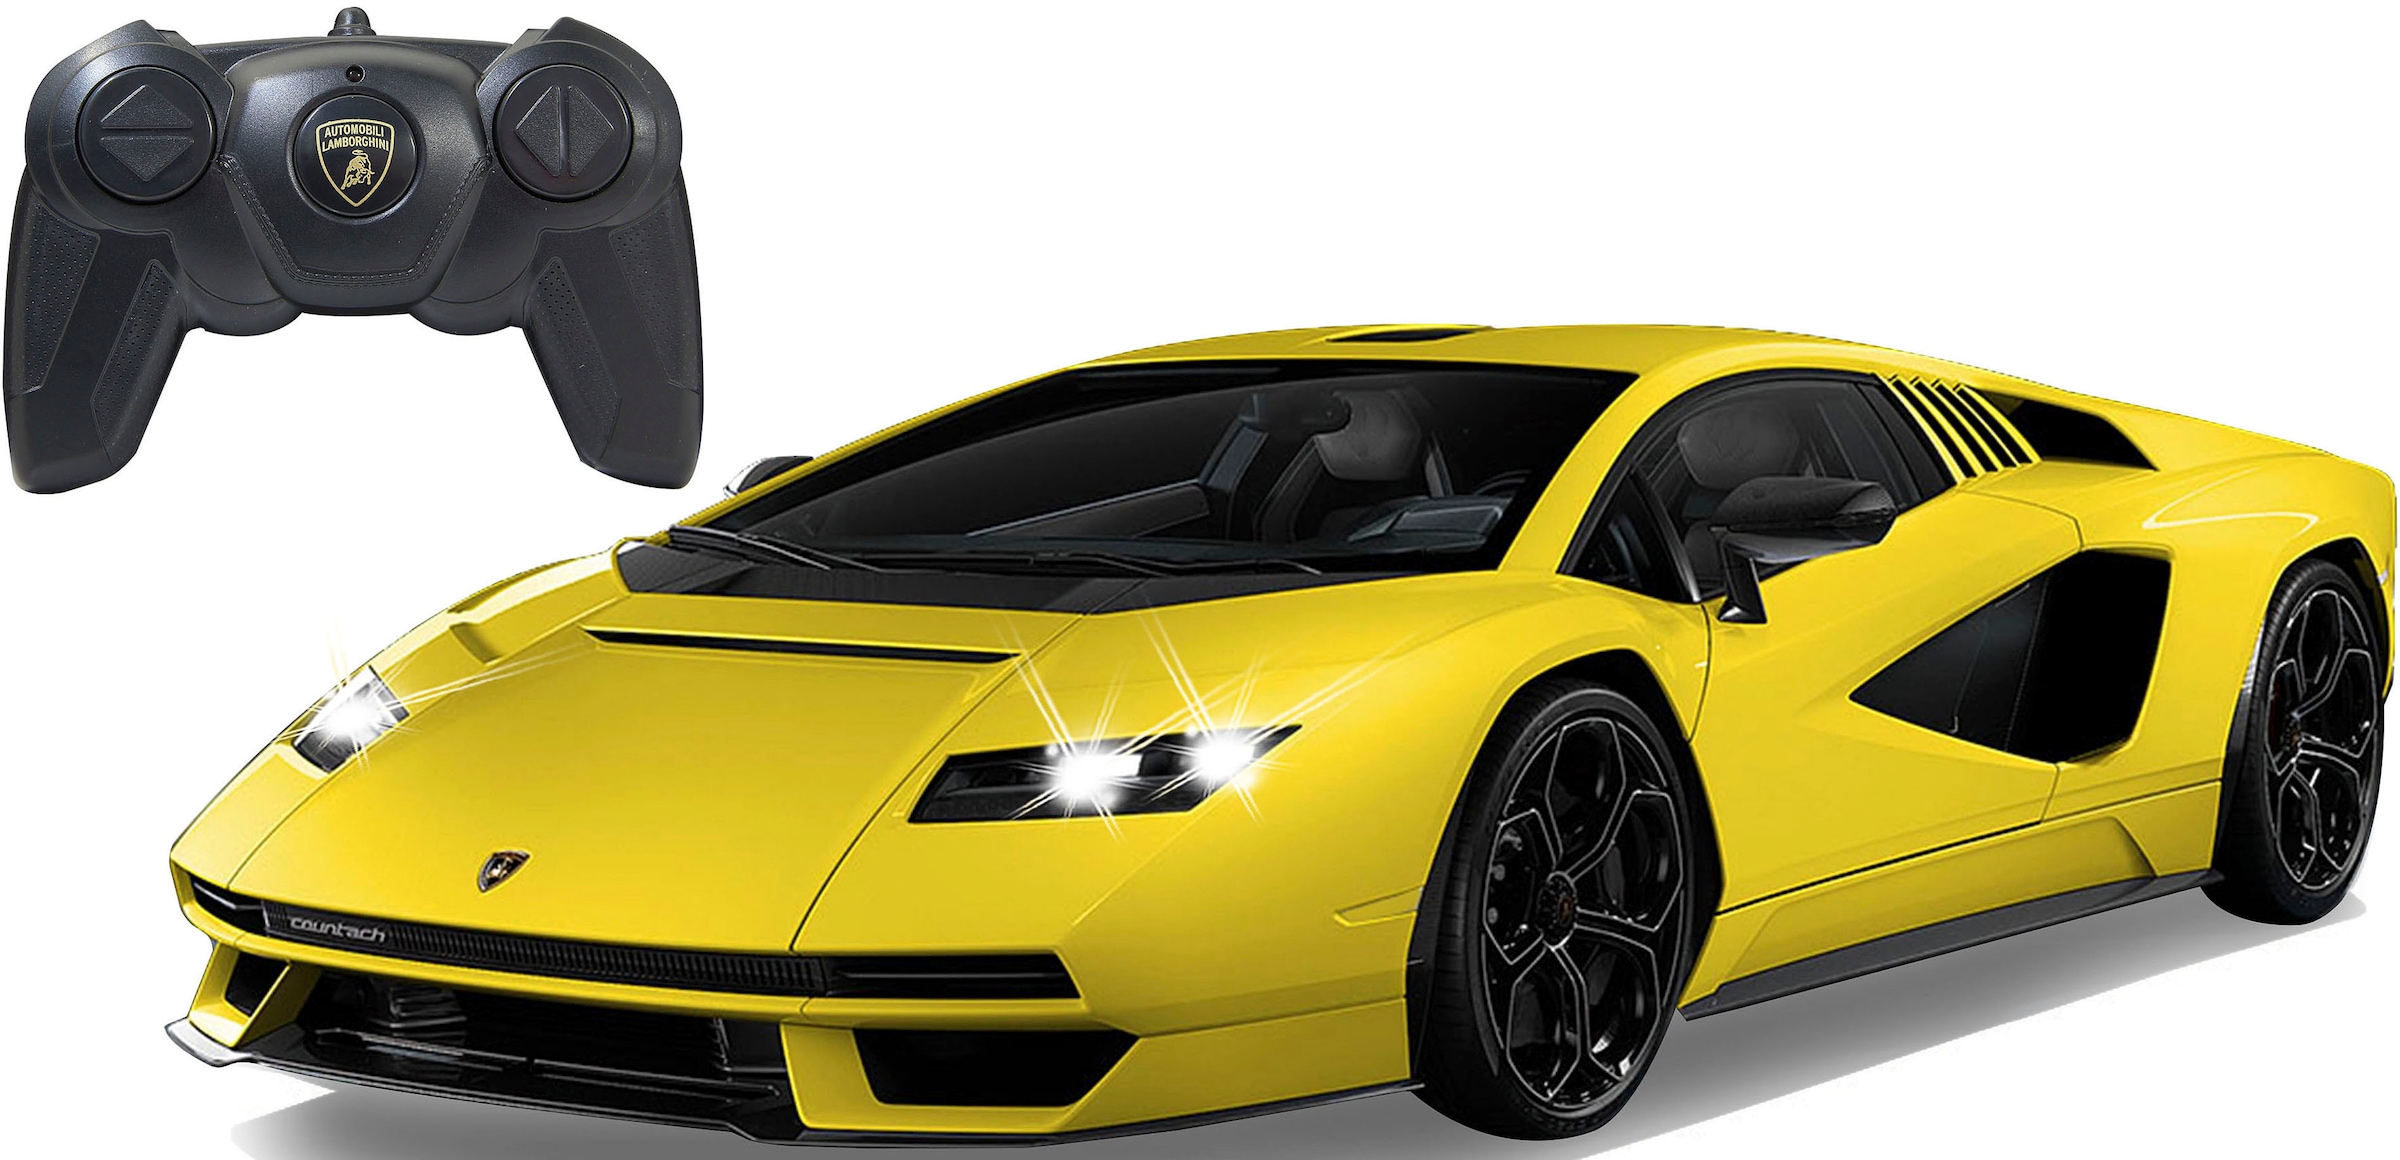 Jamara RC-Auto »Deluxe Cars, Lamborghini Countach LPI 800-4 1:16, gelb - 2,4 GHz«, mit LED-Lichtern